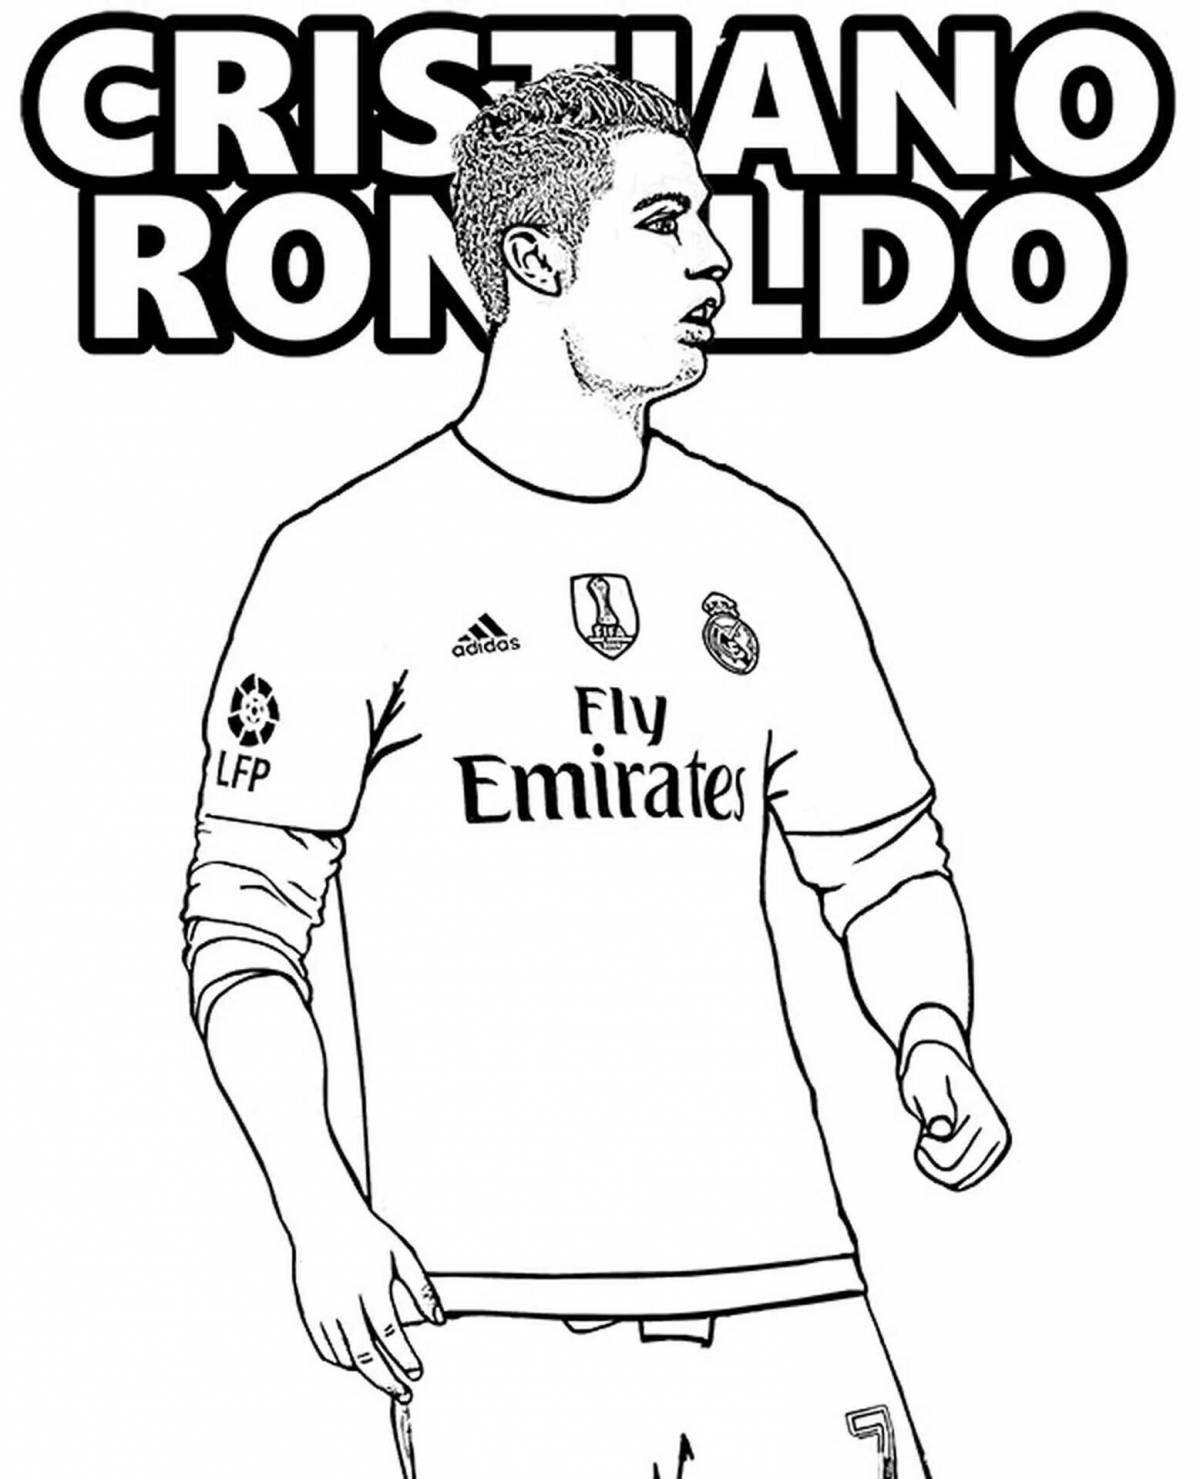 Cristiano ronaldo colorful football coloring book